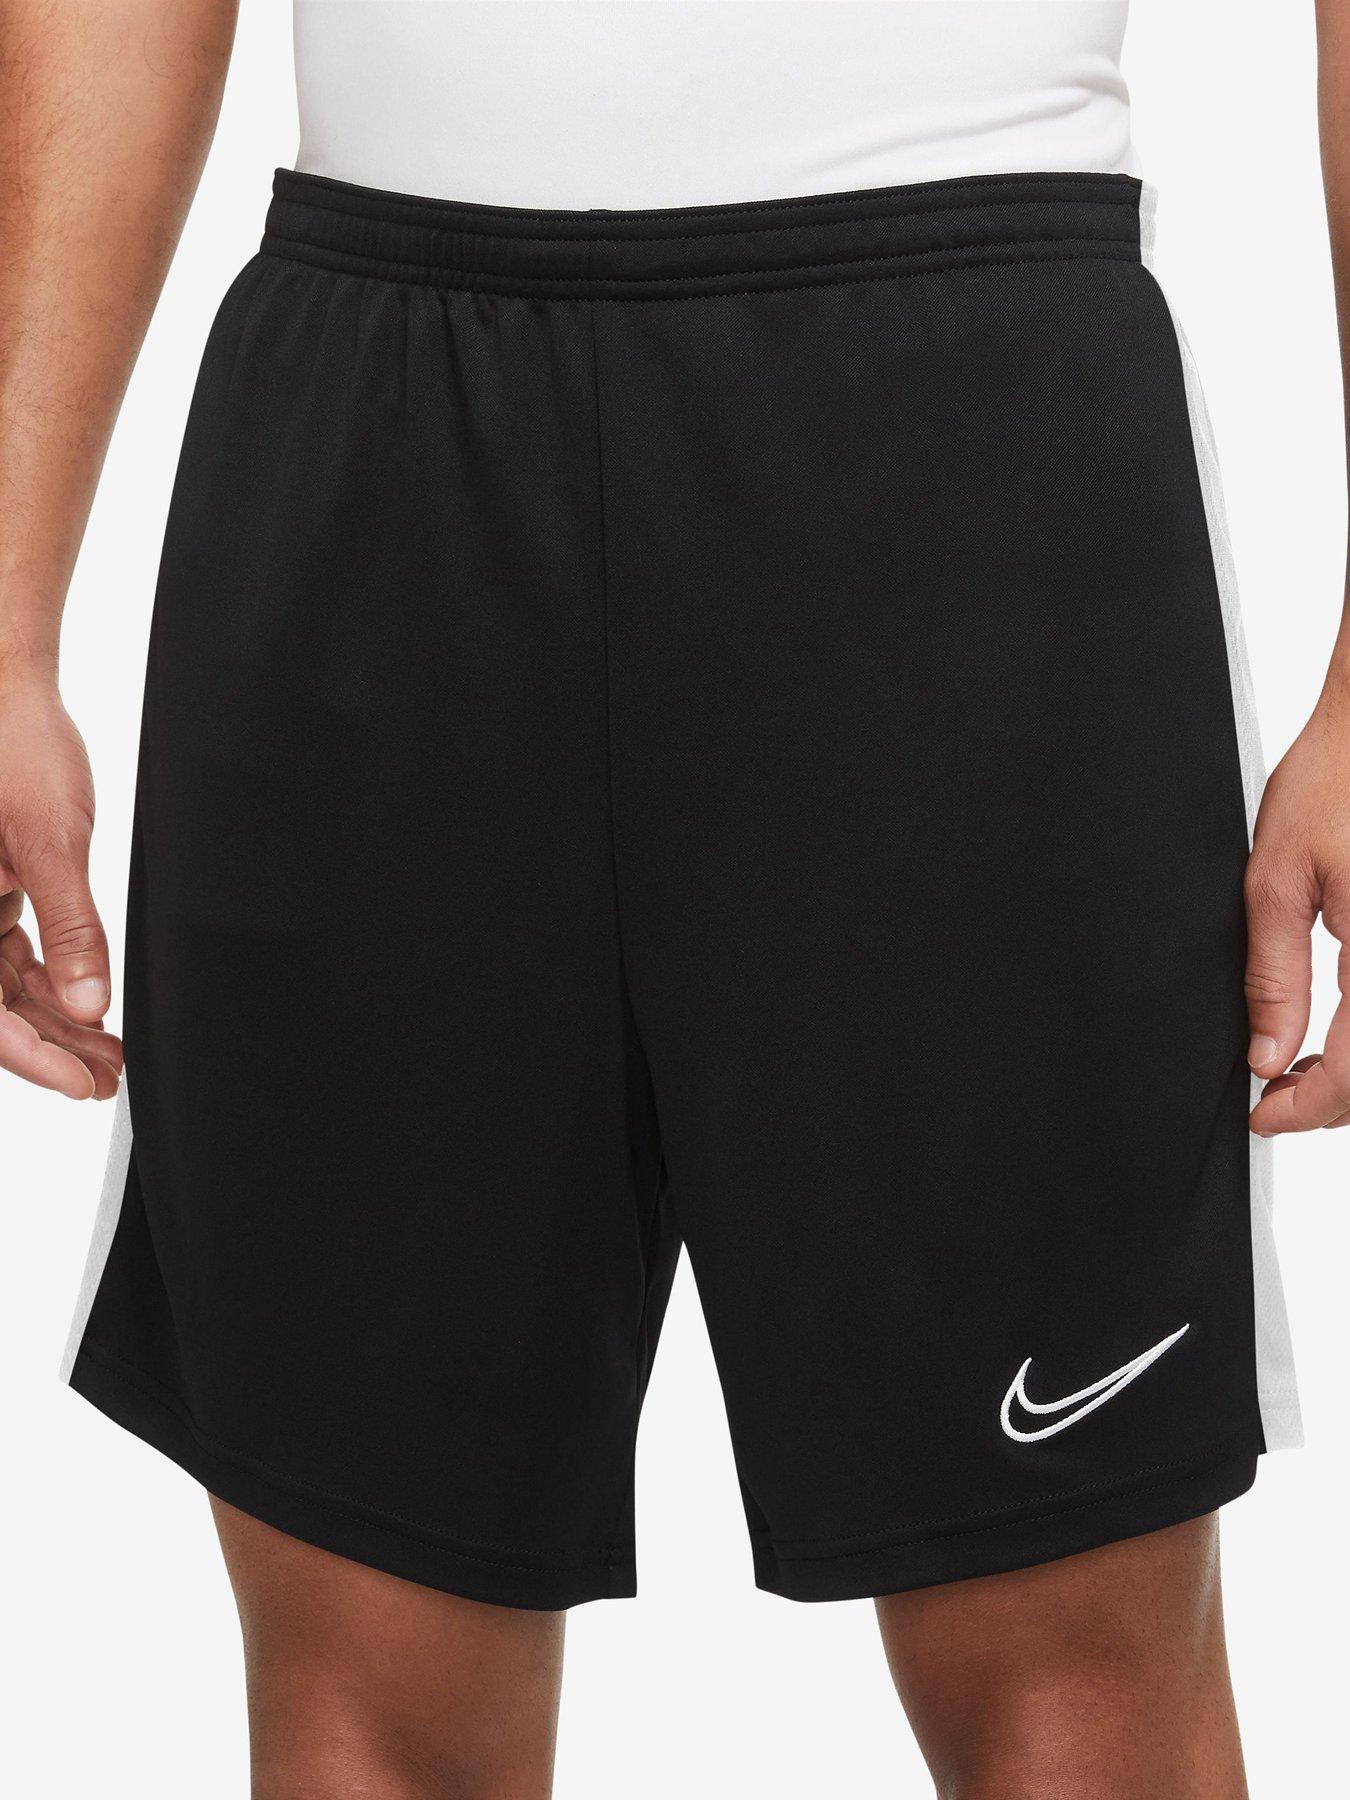 Shorts, Men, Nike